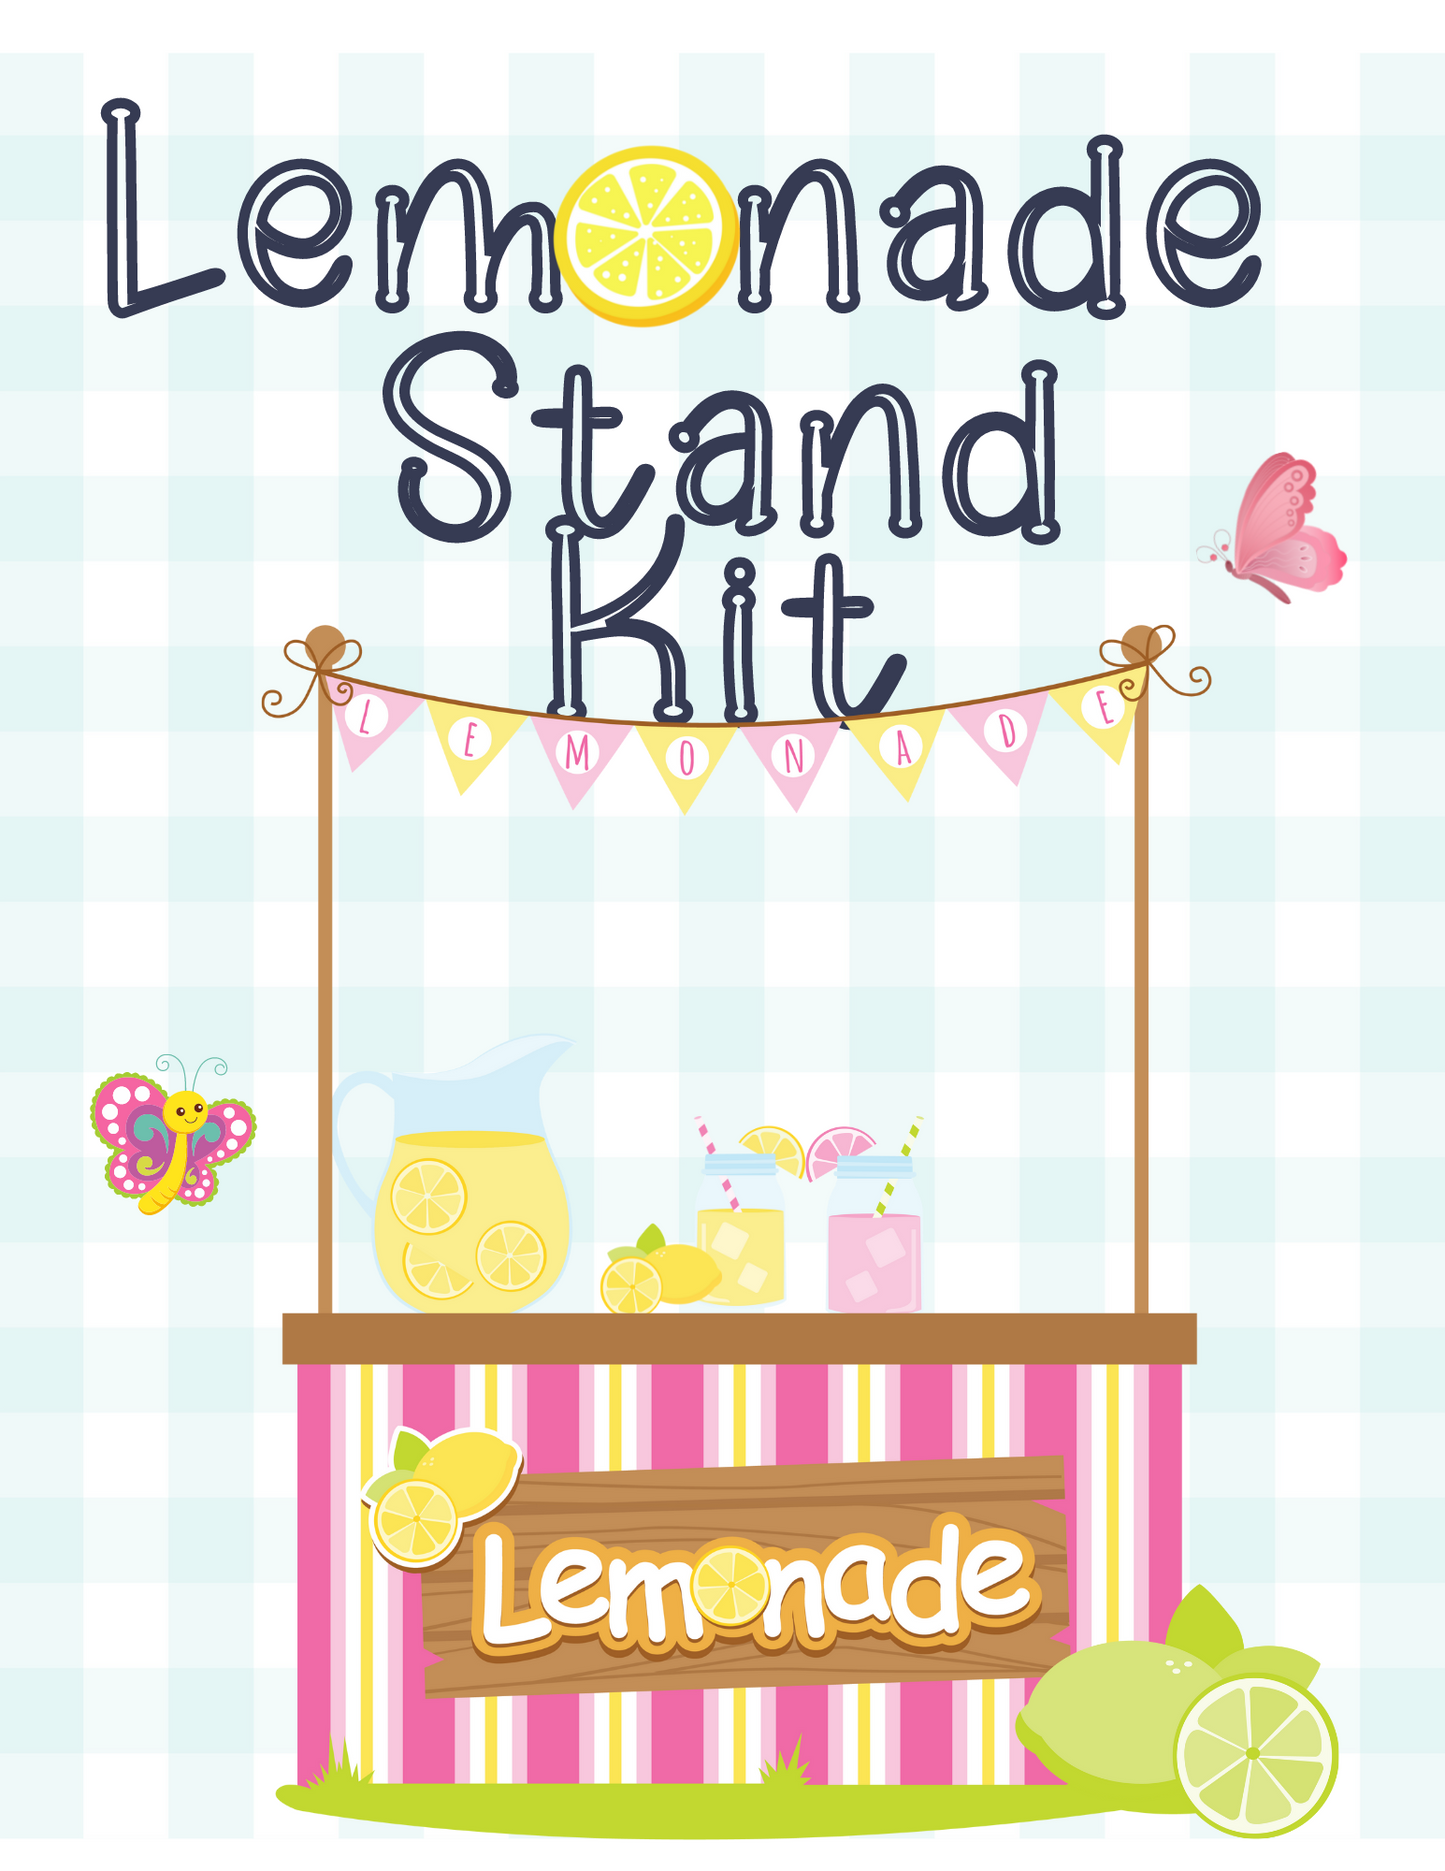 Ultimate Lemonade Stand Kit